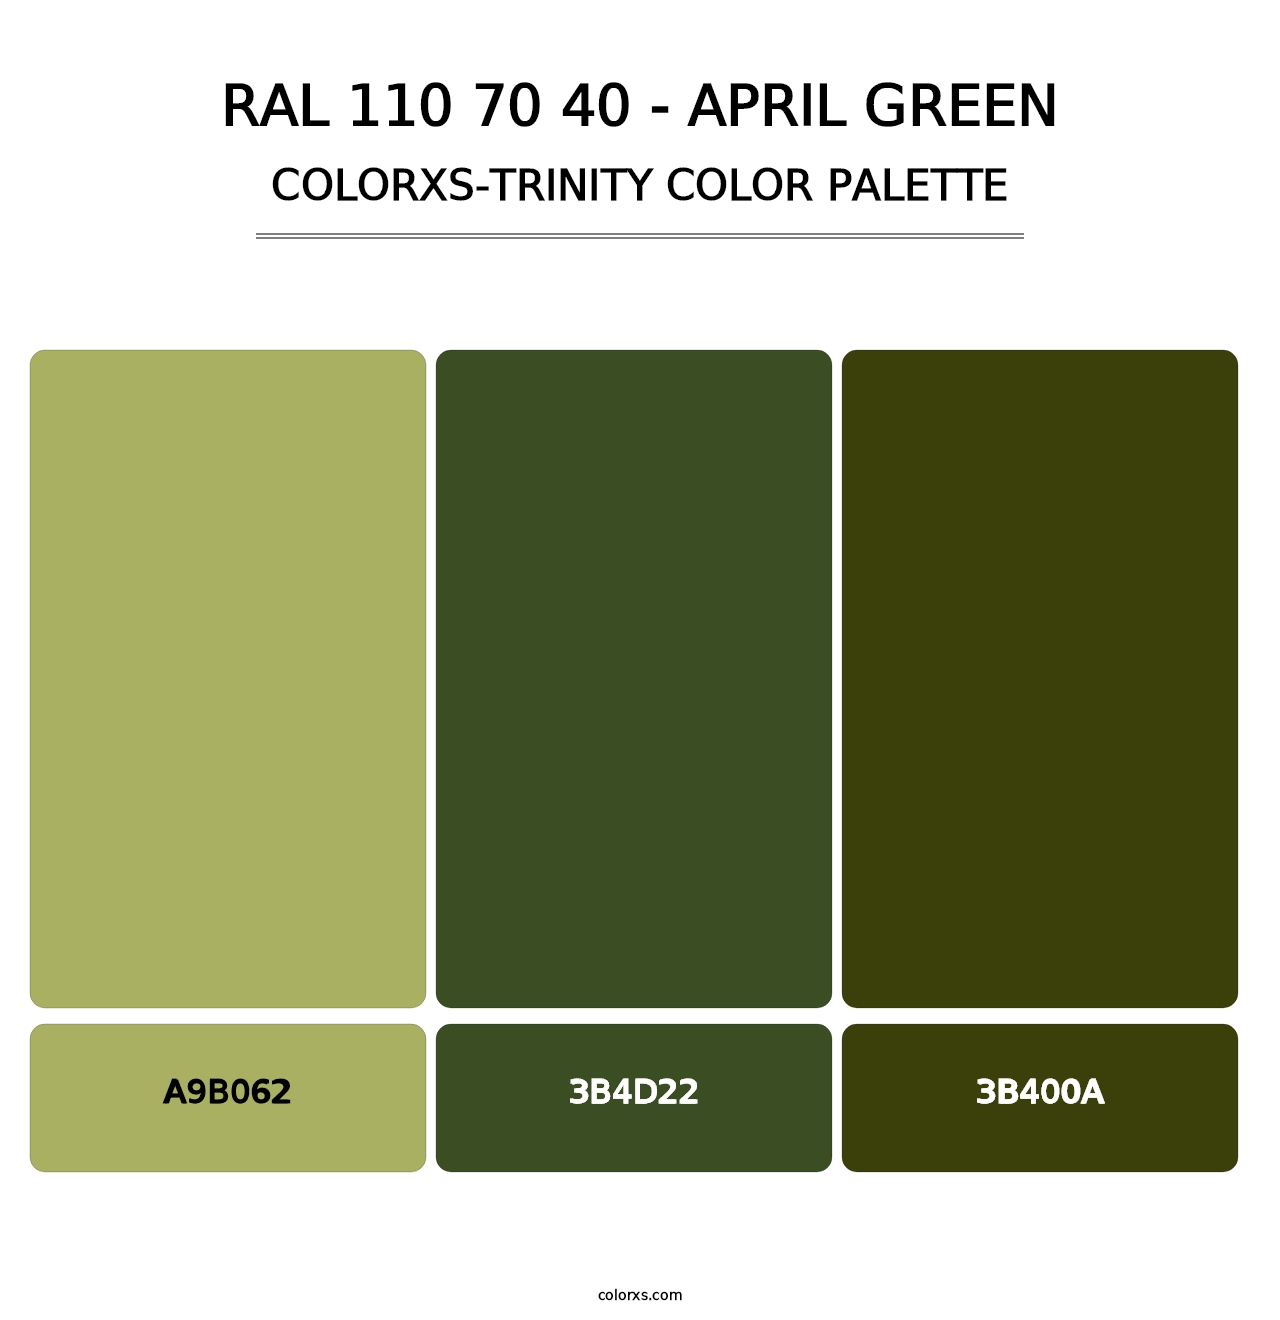 RAL 110 70 40 - April Green - Colorxs Trinity Palette